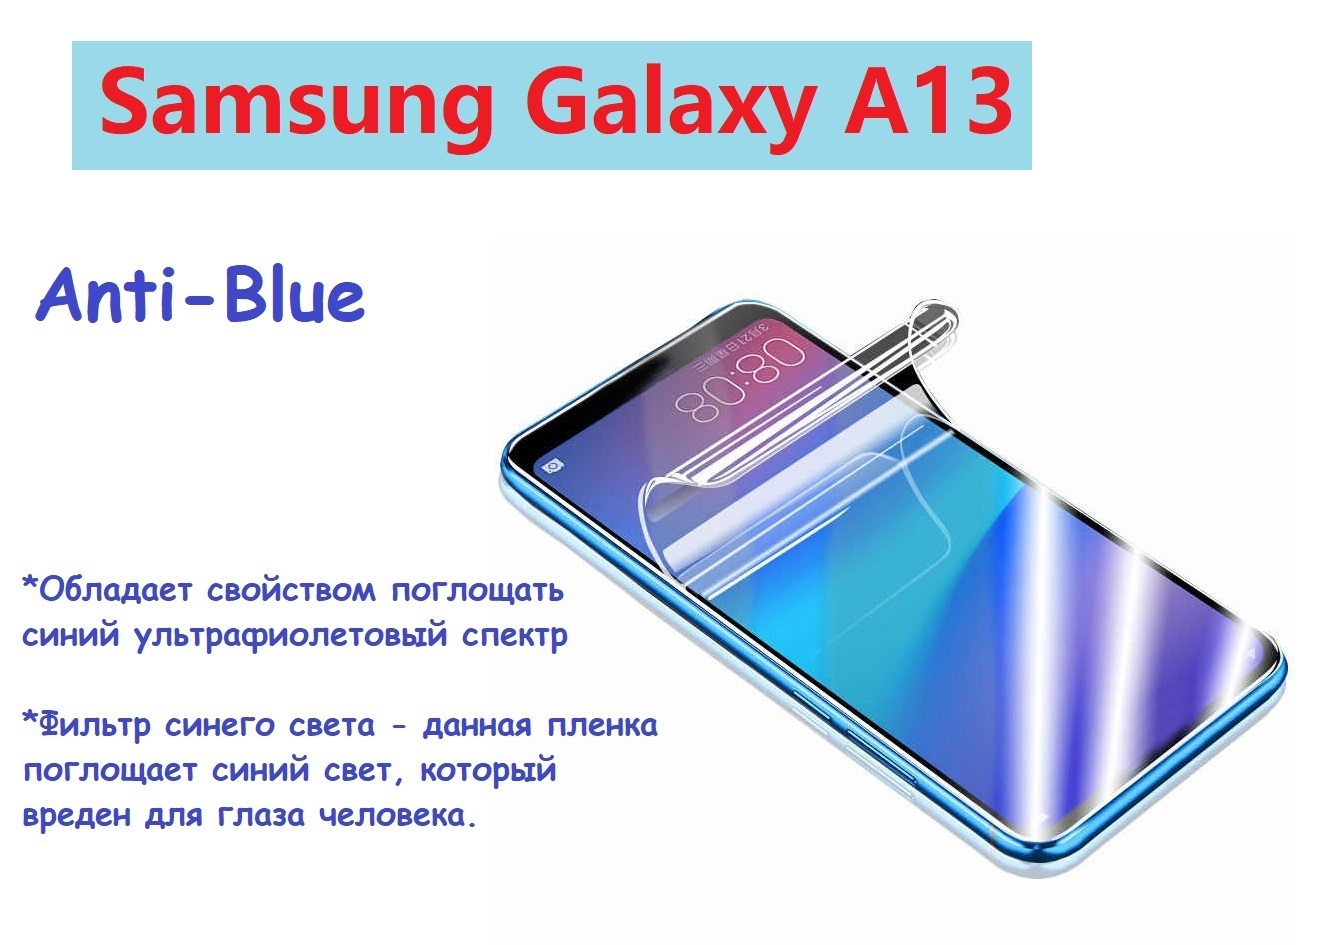 Гидрогелевая Пленка Для Samsung Galaxy A52